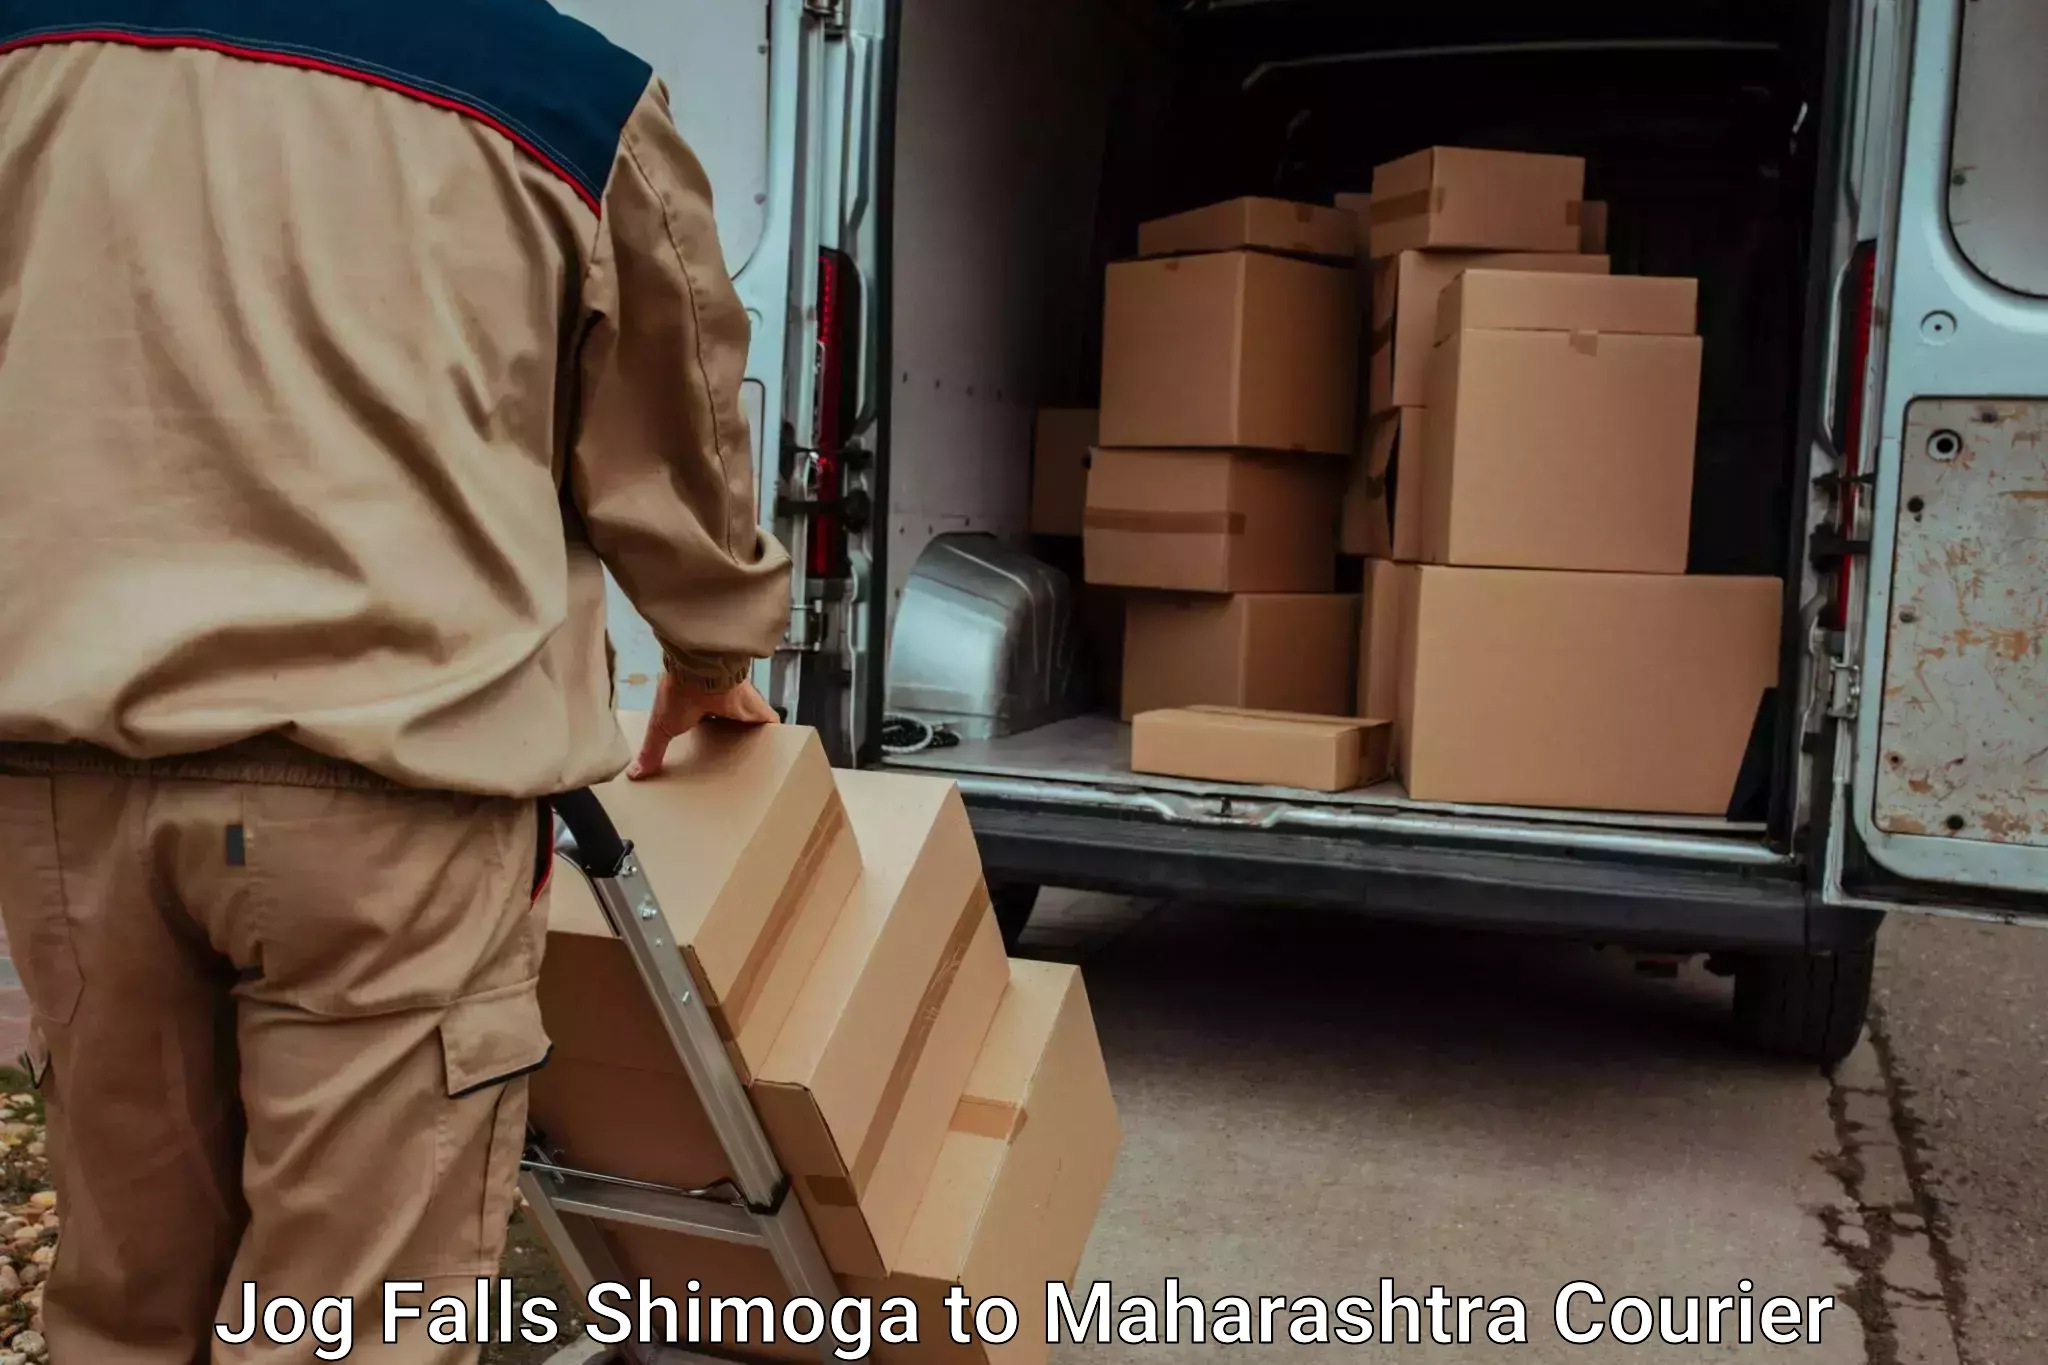 Door to door luggage delivery Jog Falls Shimoga to Bhadravati Chandrapur